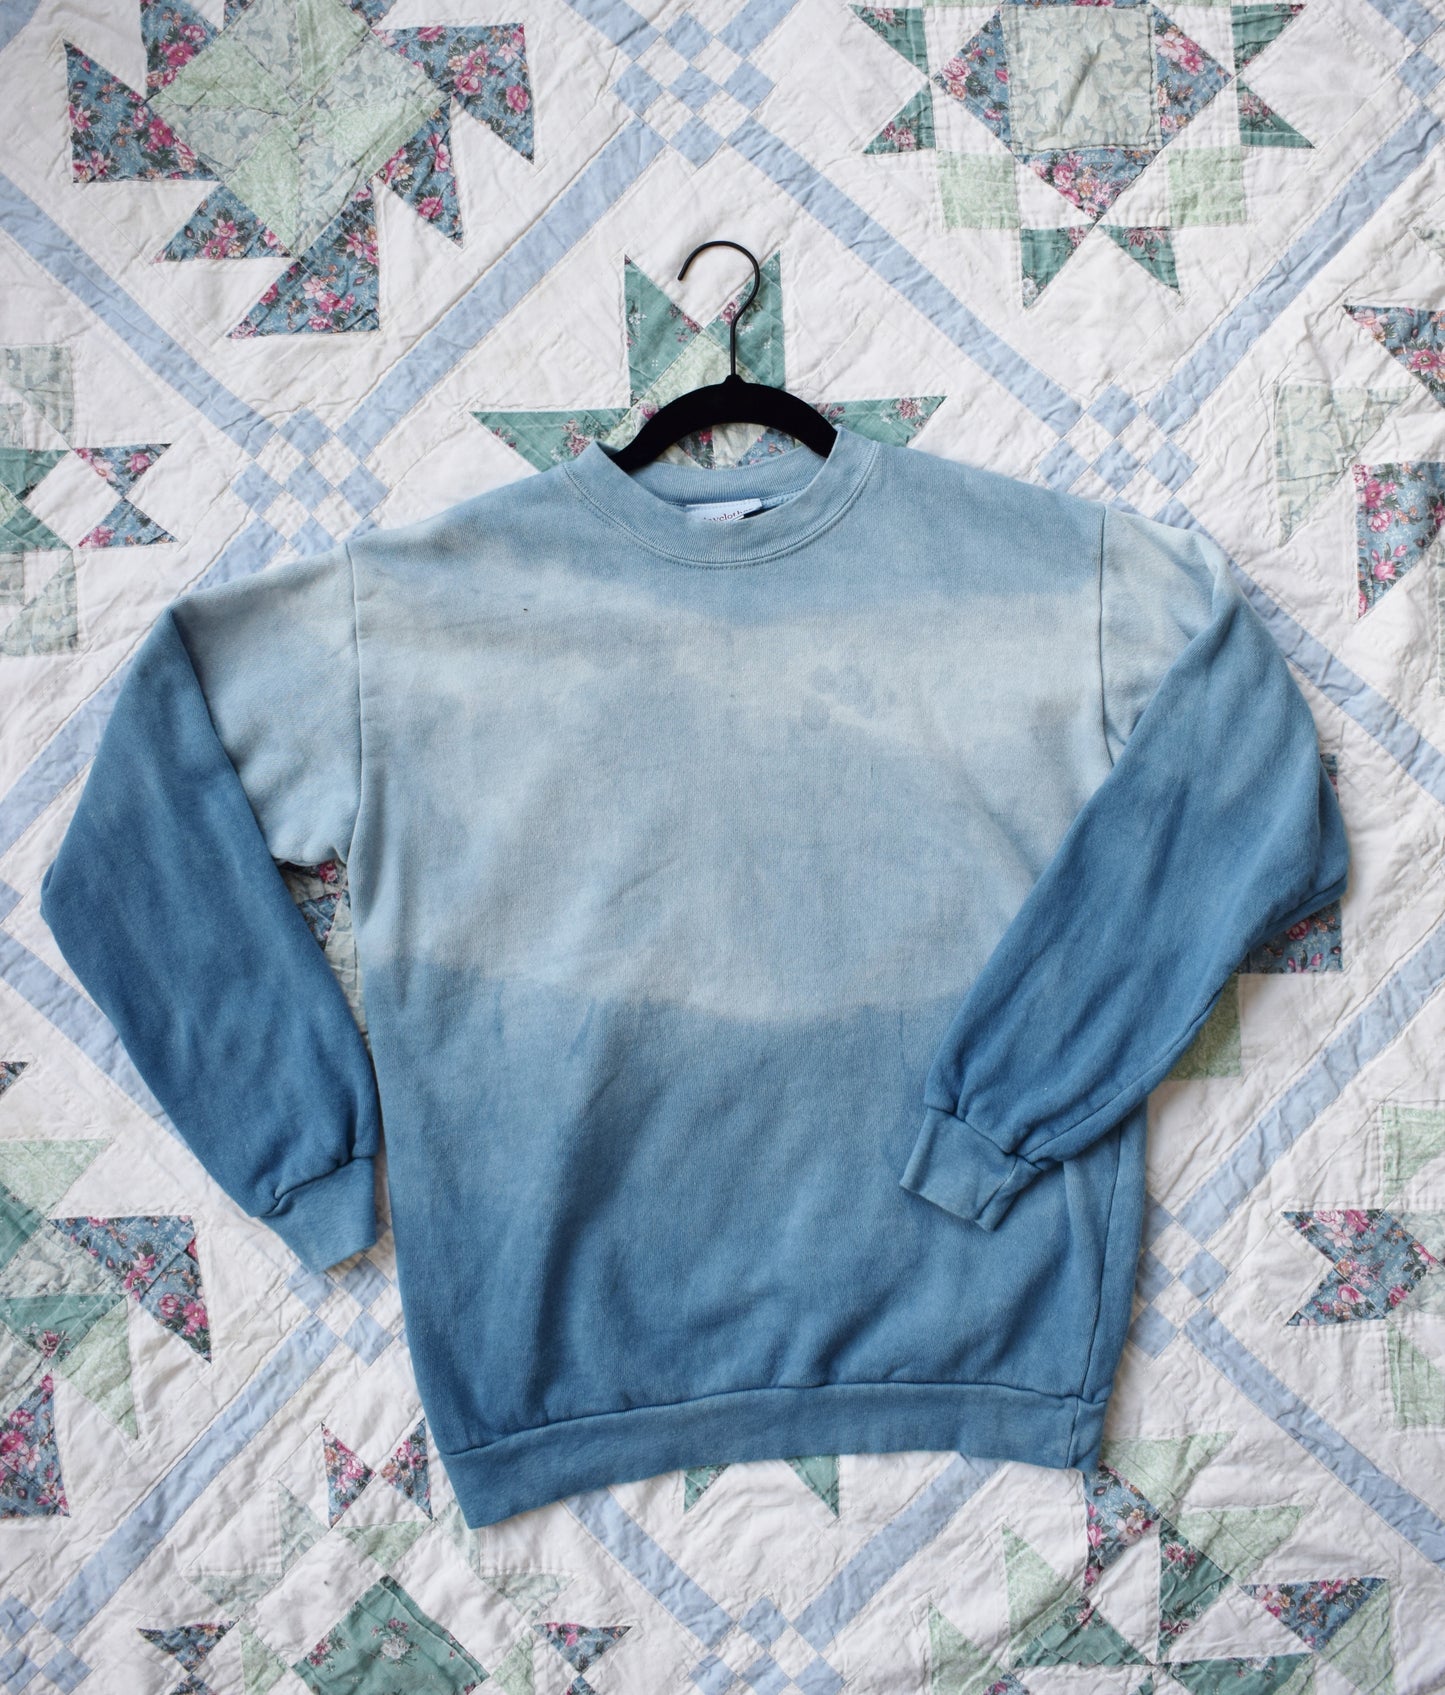 Indigo Dyed Sweatshirt, Tides Series 5